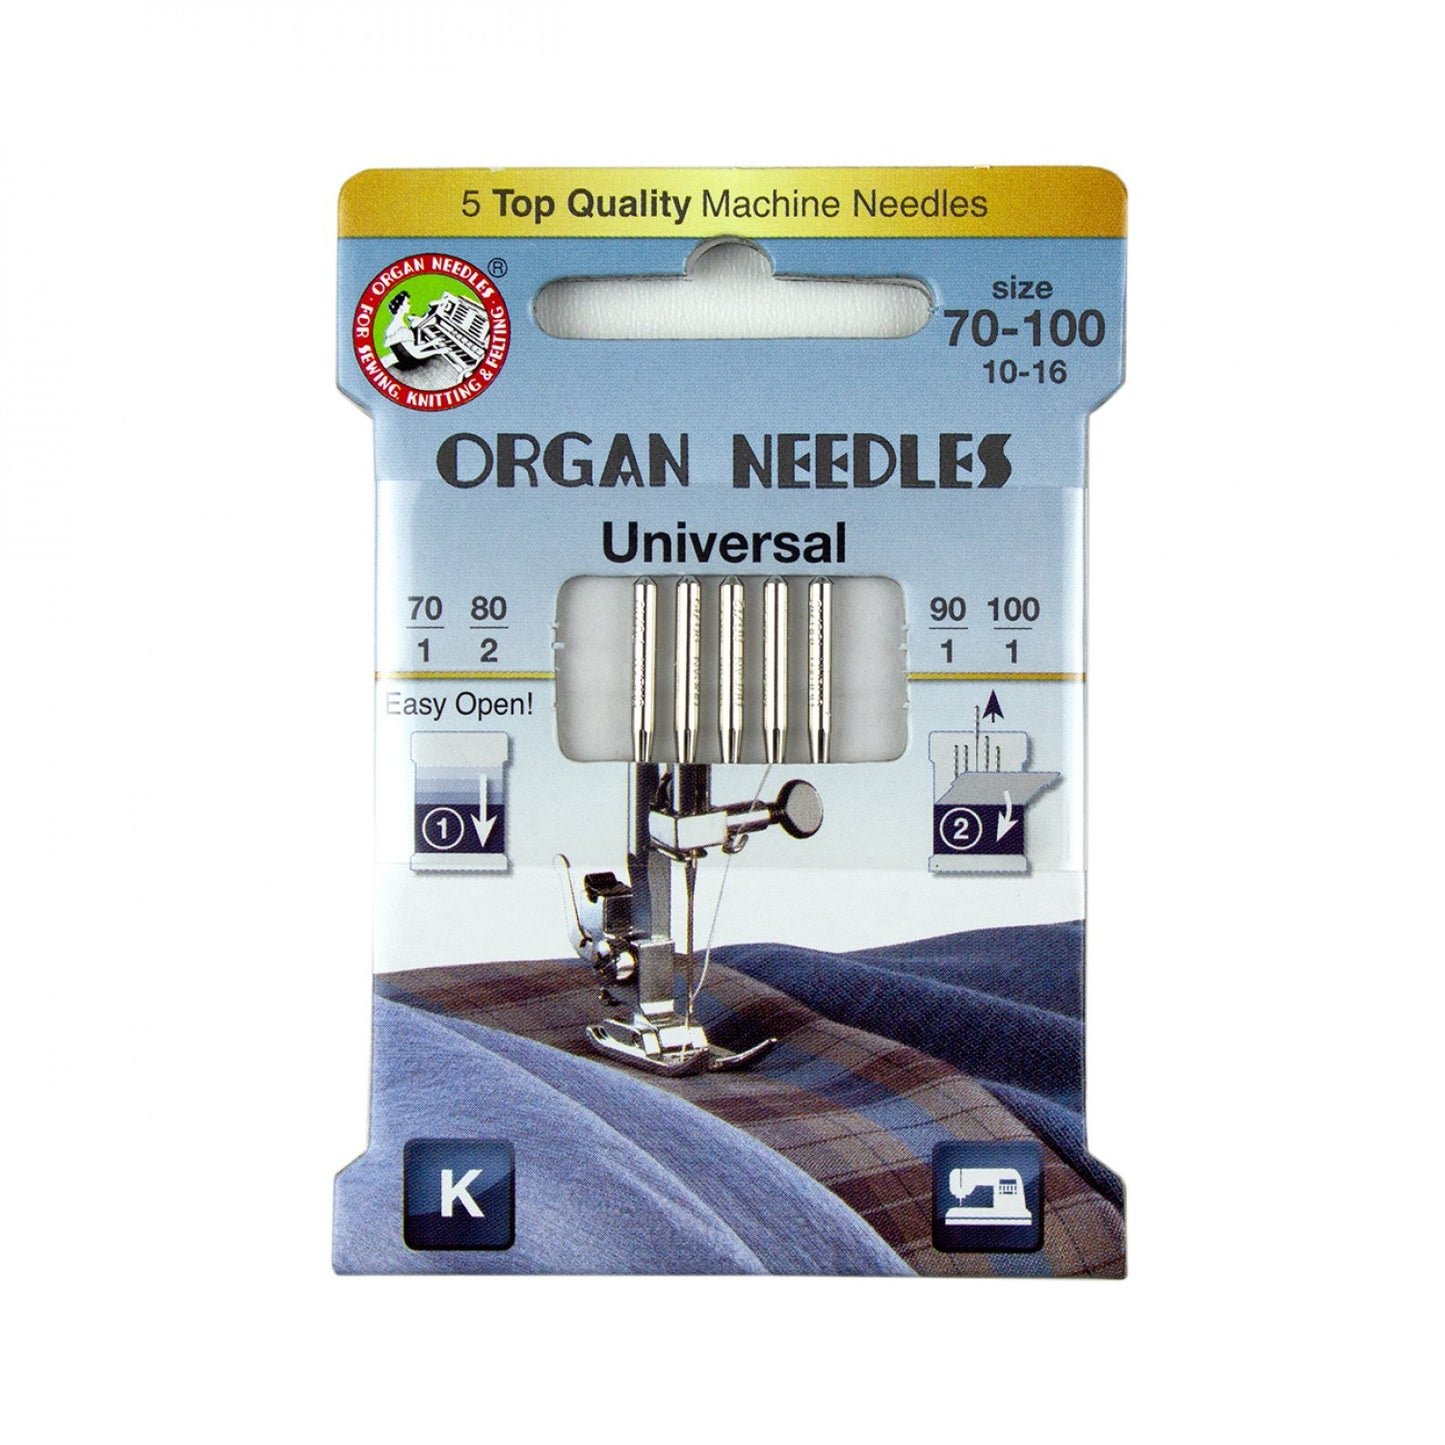 Organ Needles Universal